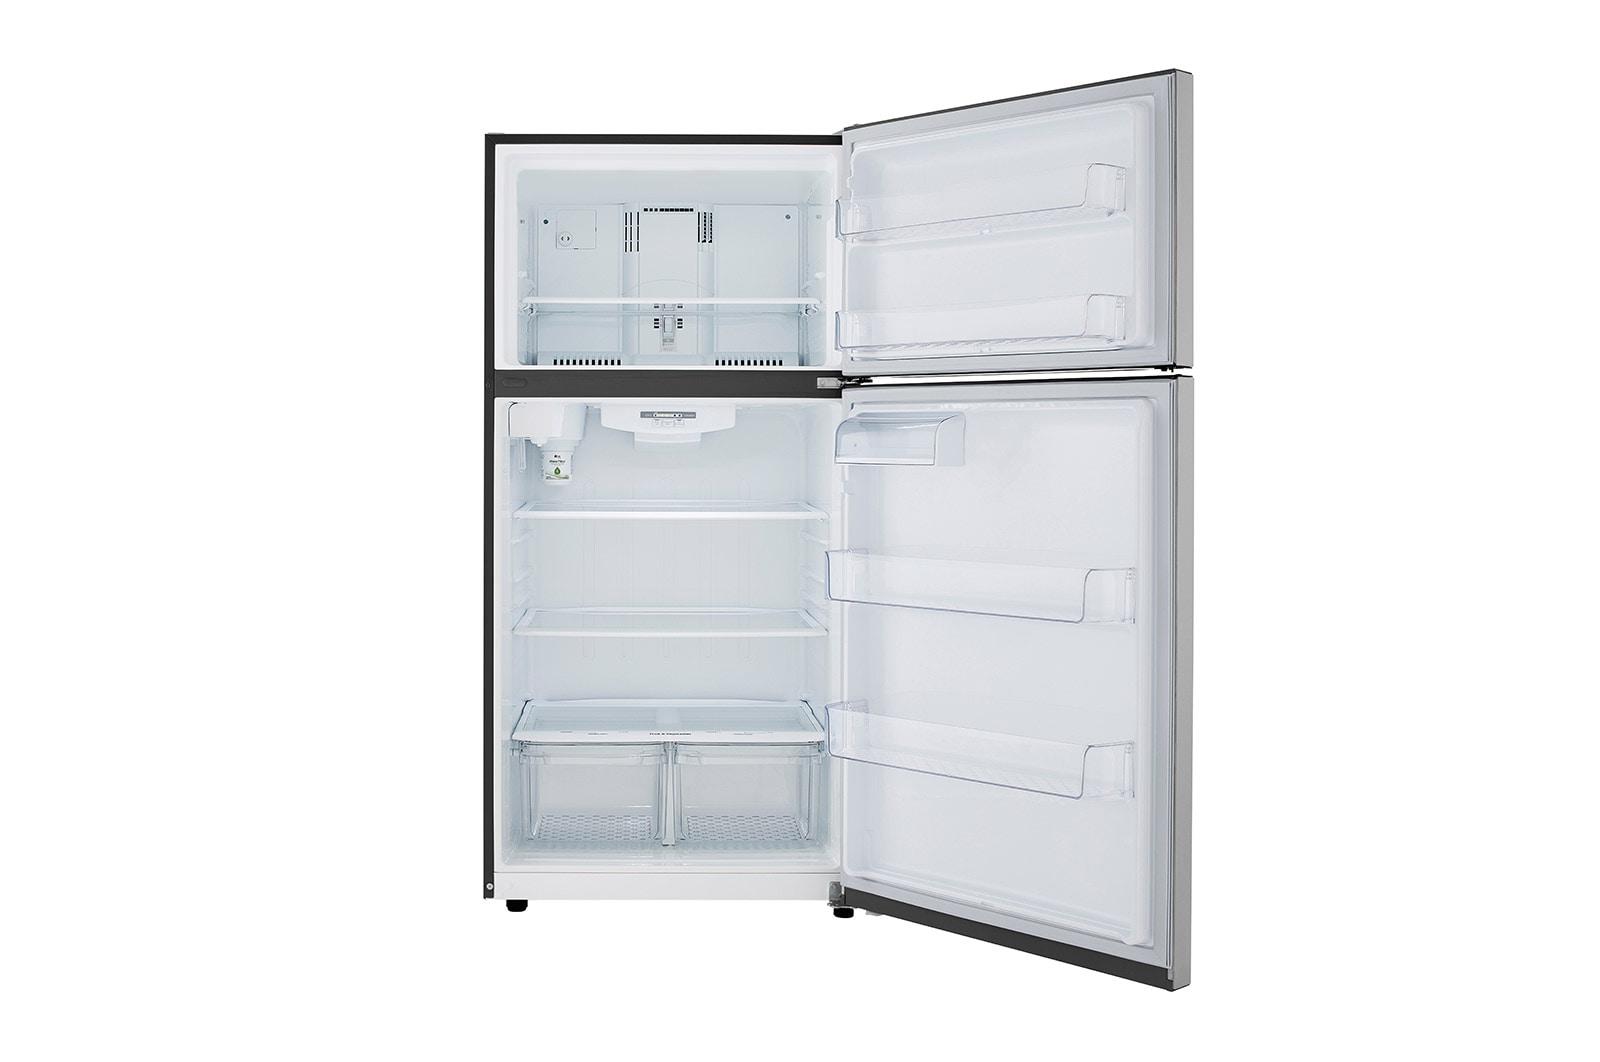 Lg 24 cu. ft. Top Freezer Refrigerator